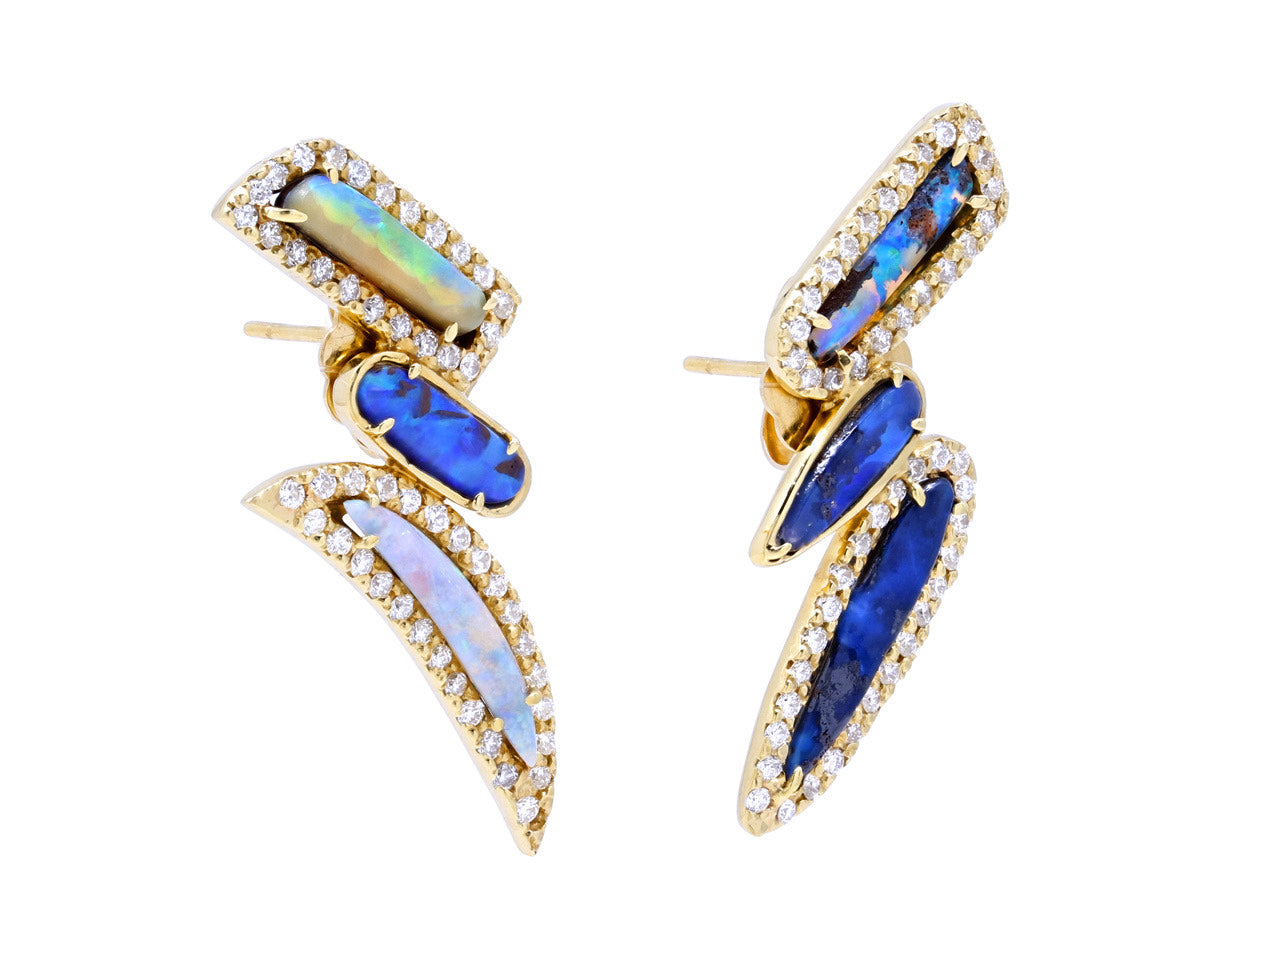 Kimberly McDonald Opal and Diamond Earrings in 18K Gold